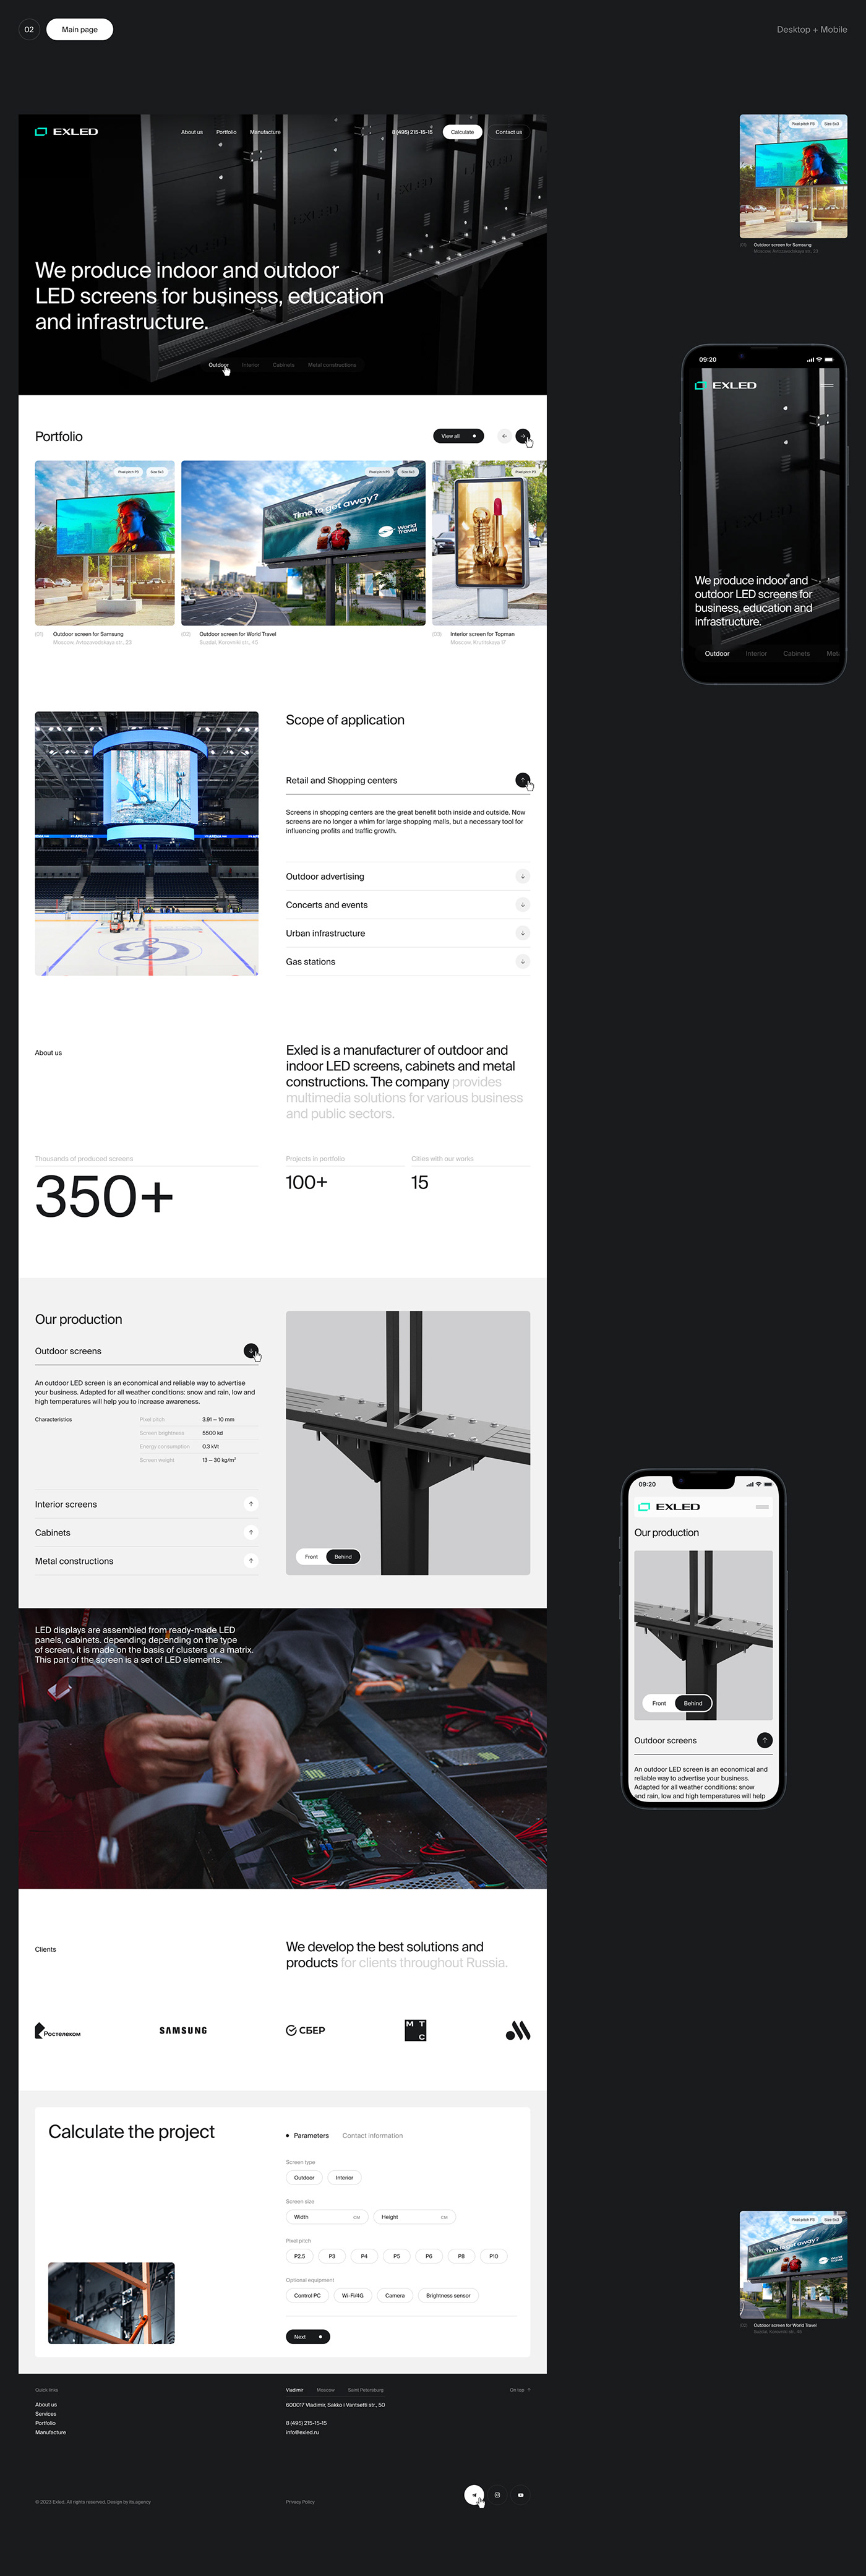 UI/UX user interface corporate brand identity 3D mobile Website user experience ui design led